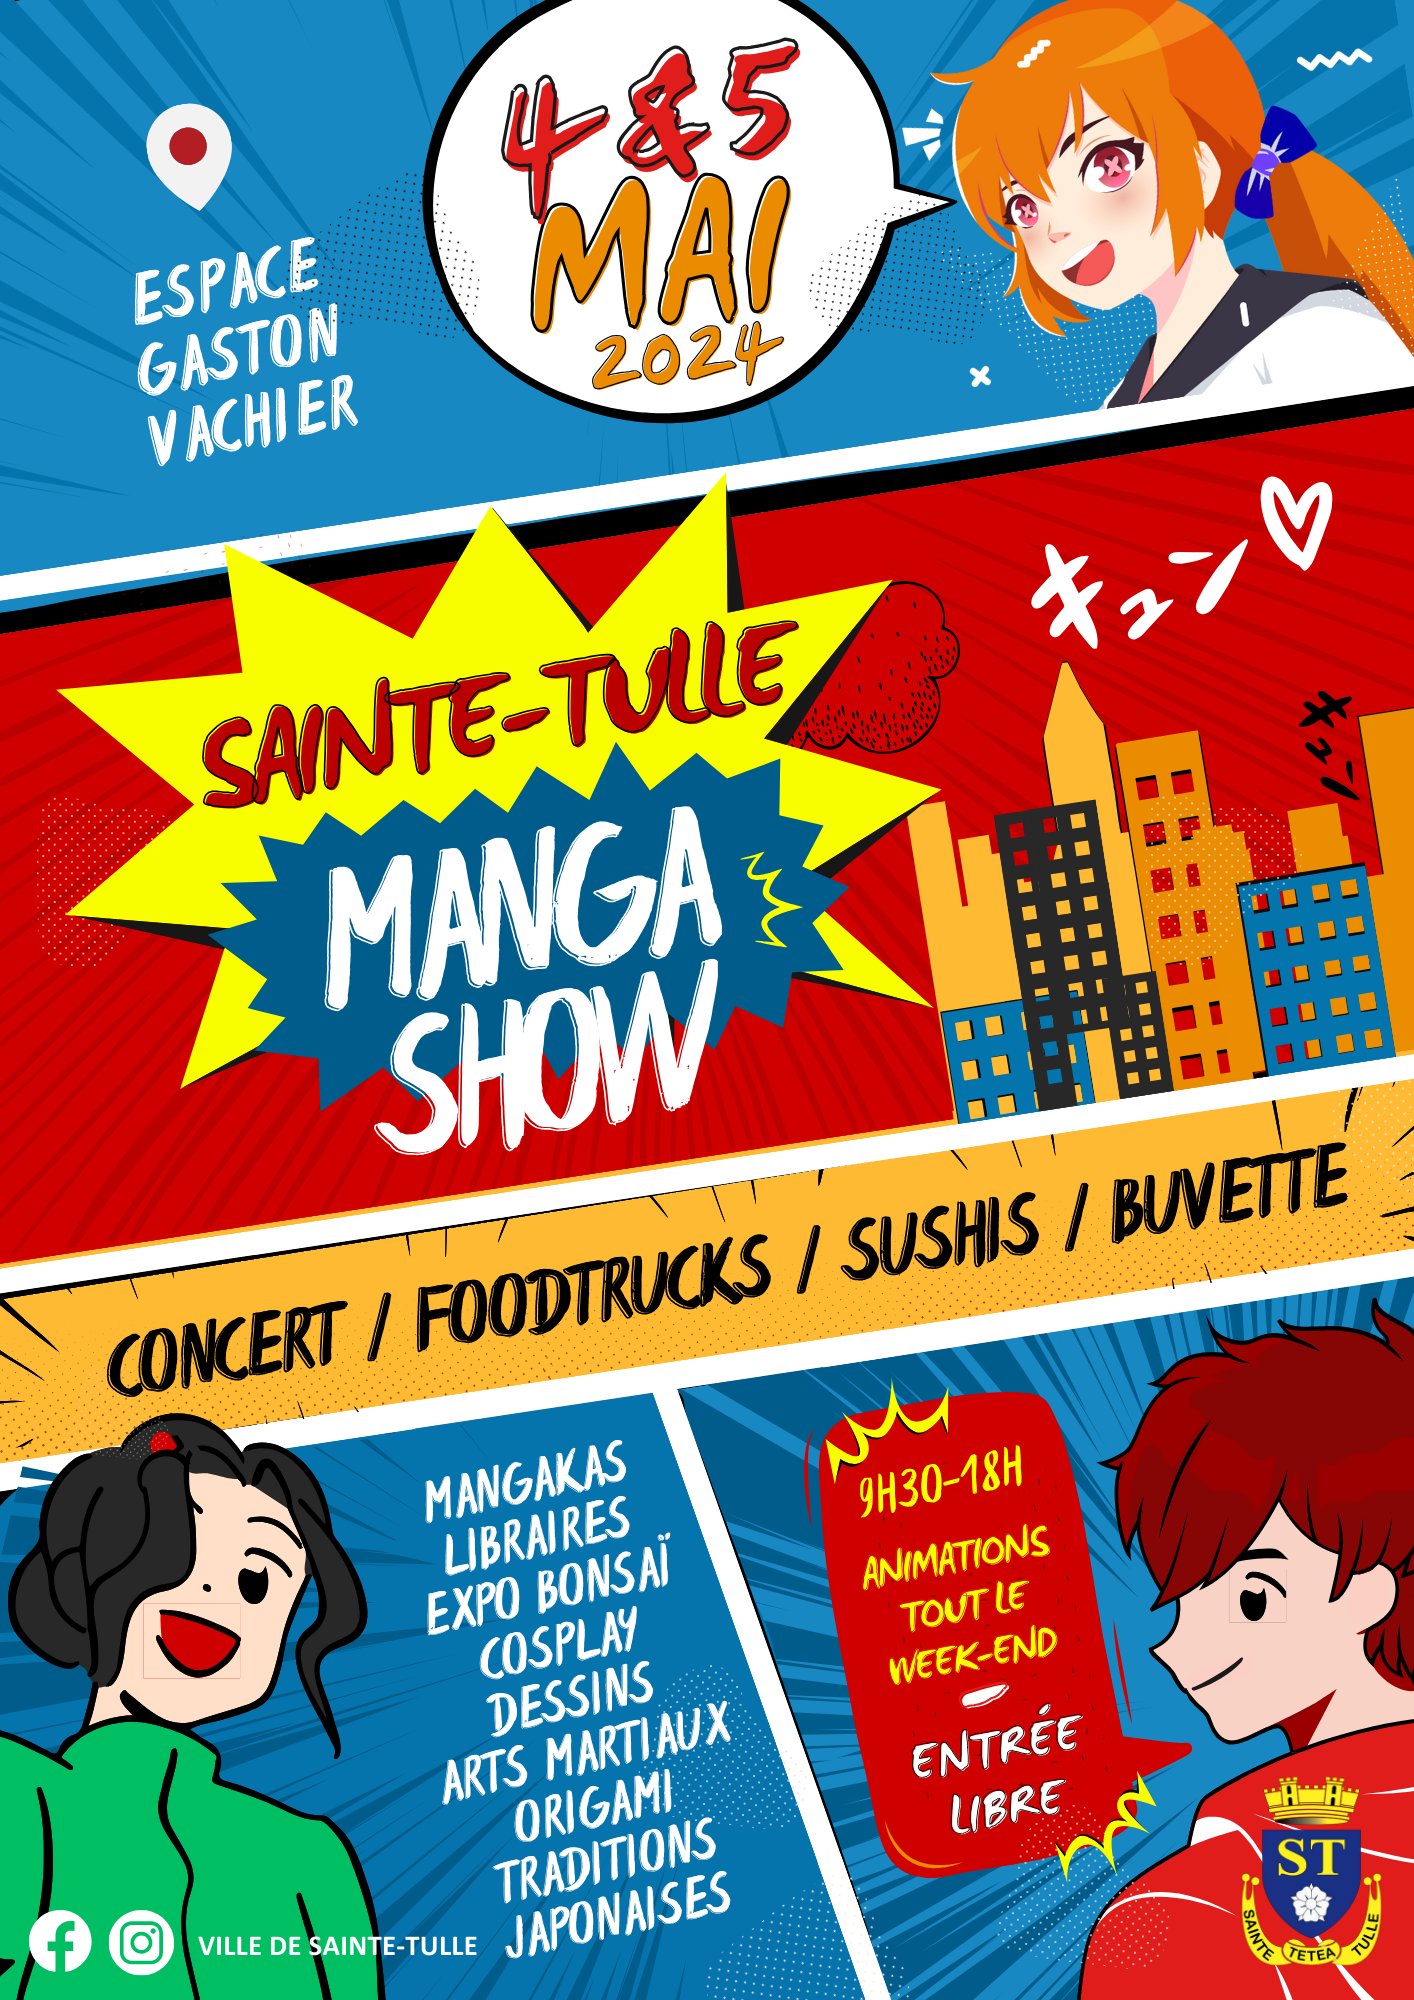 Sainte-Tulle Manga Show